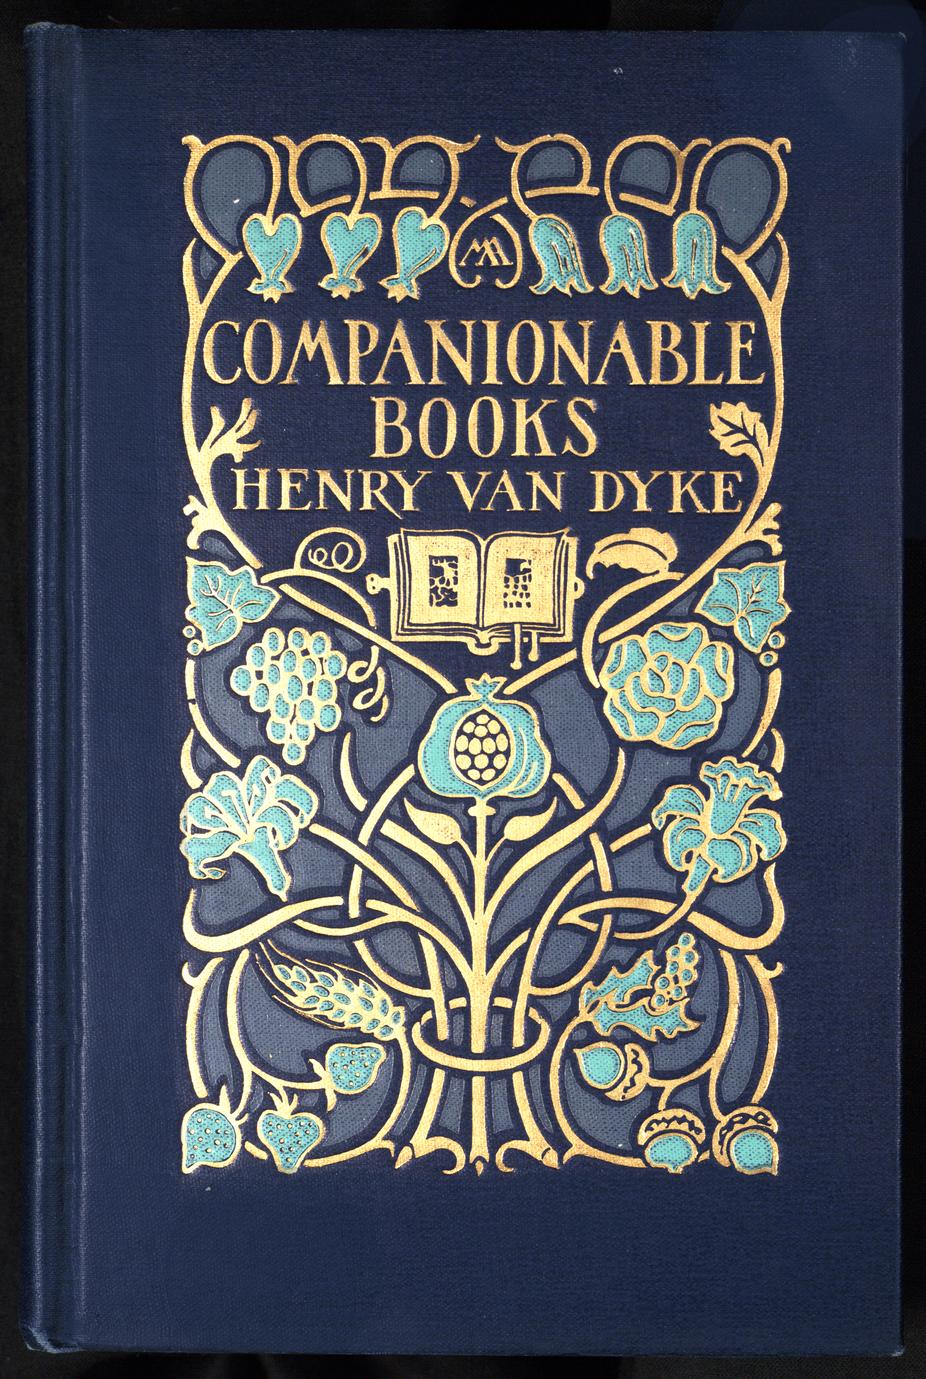 Companionable books (1 of 4)